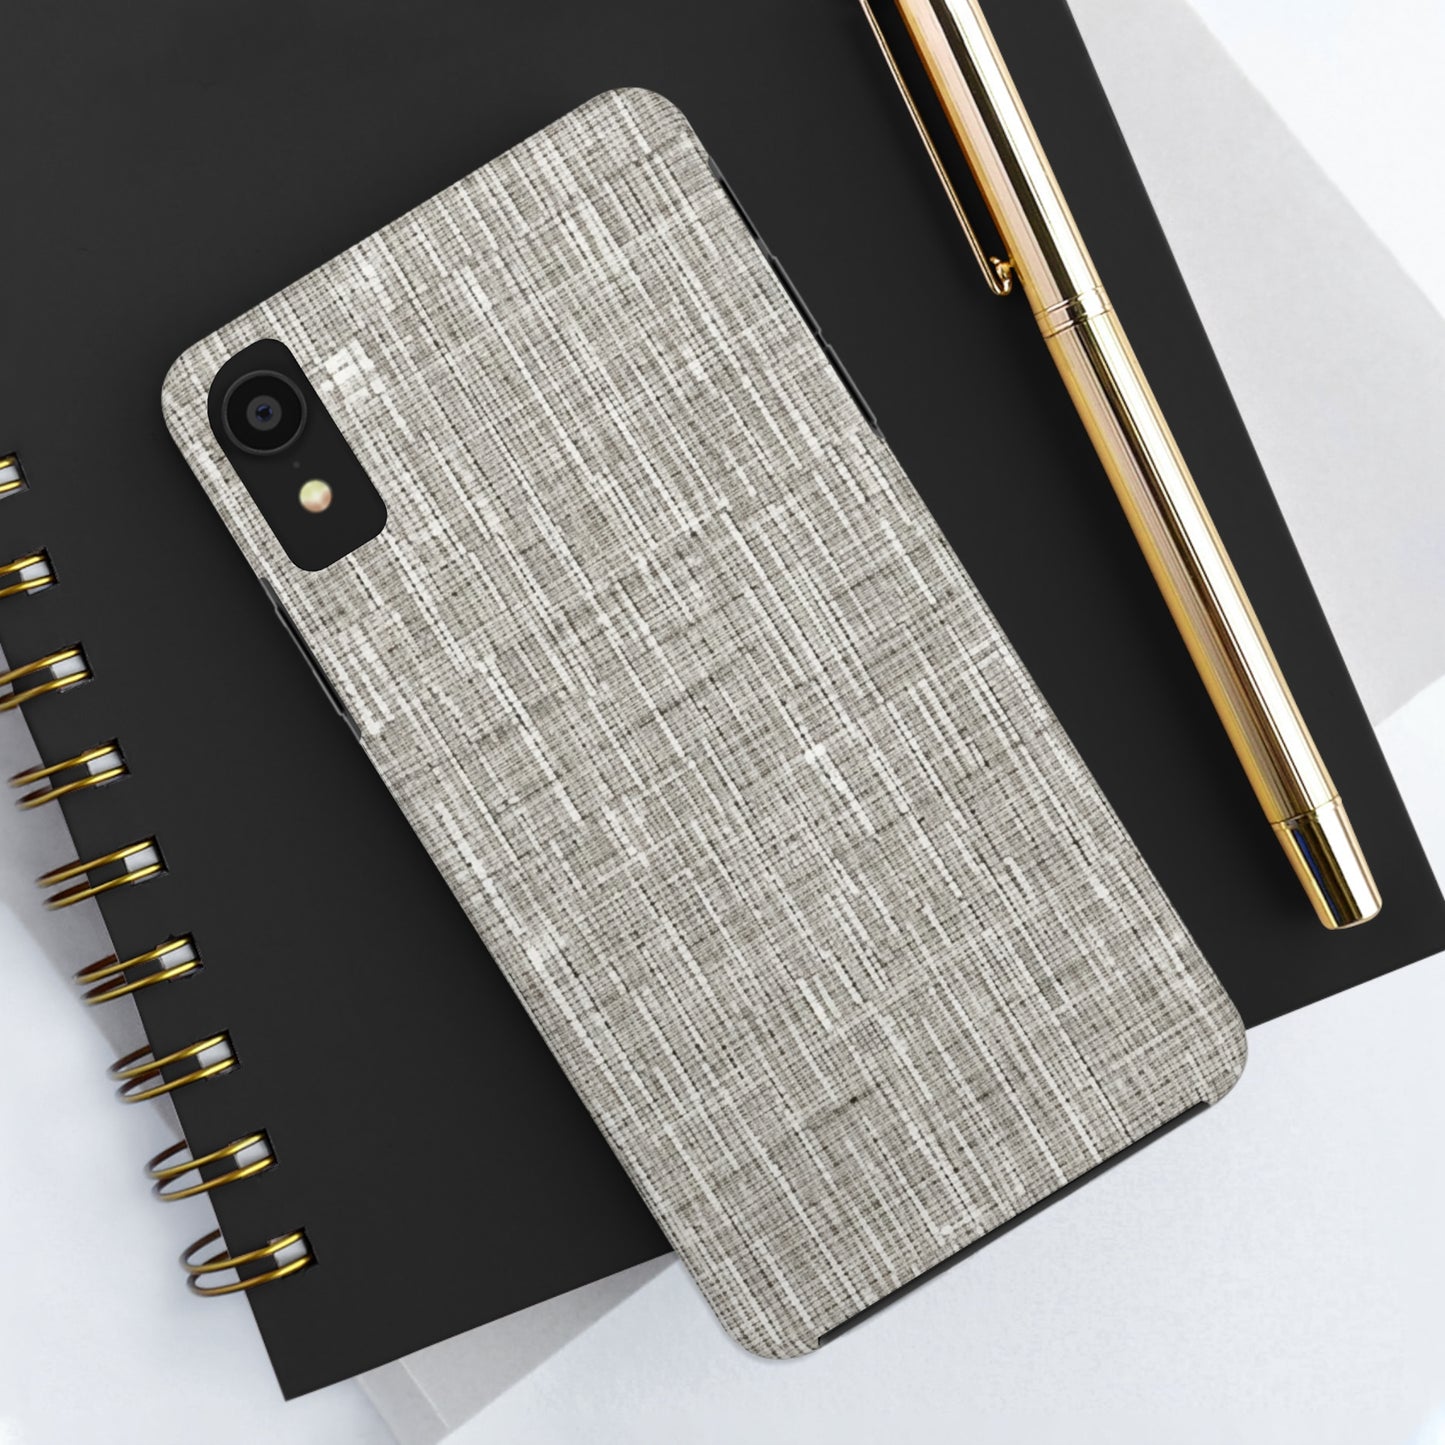 Silver Grey: Denim-Inspired, Contemporary Fabric Design - Tough Phone Cases